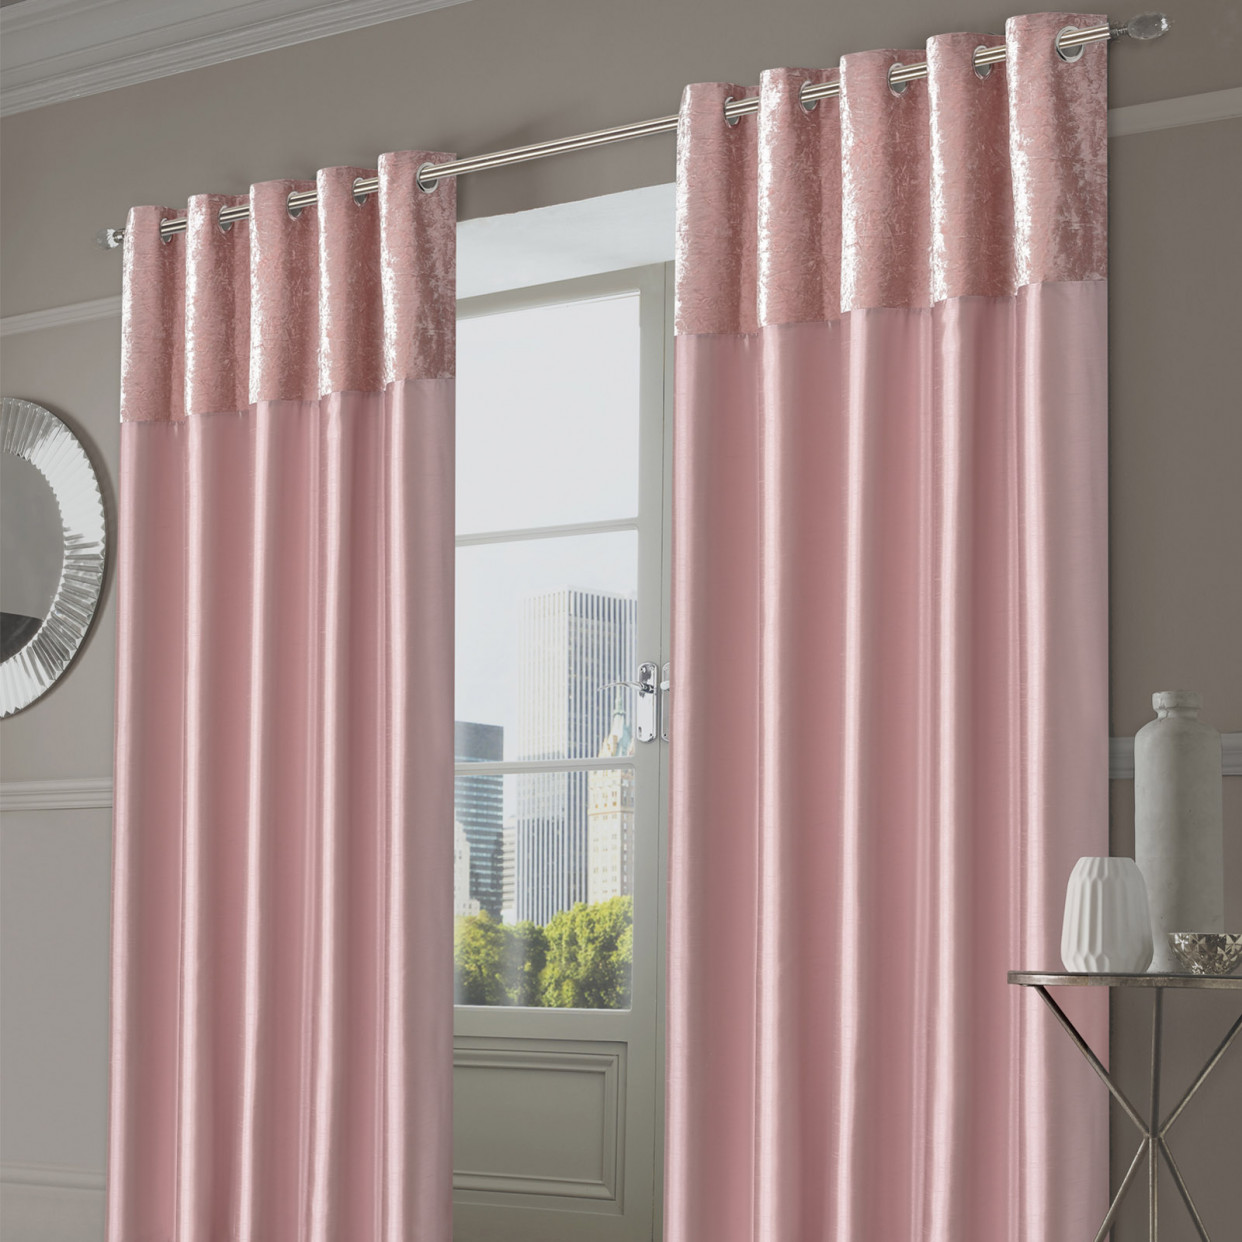 Sienna Home Manhattan Crushed Velvet Band Eyelet Curtains - Blush Pink, 90" x 90">